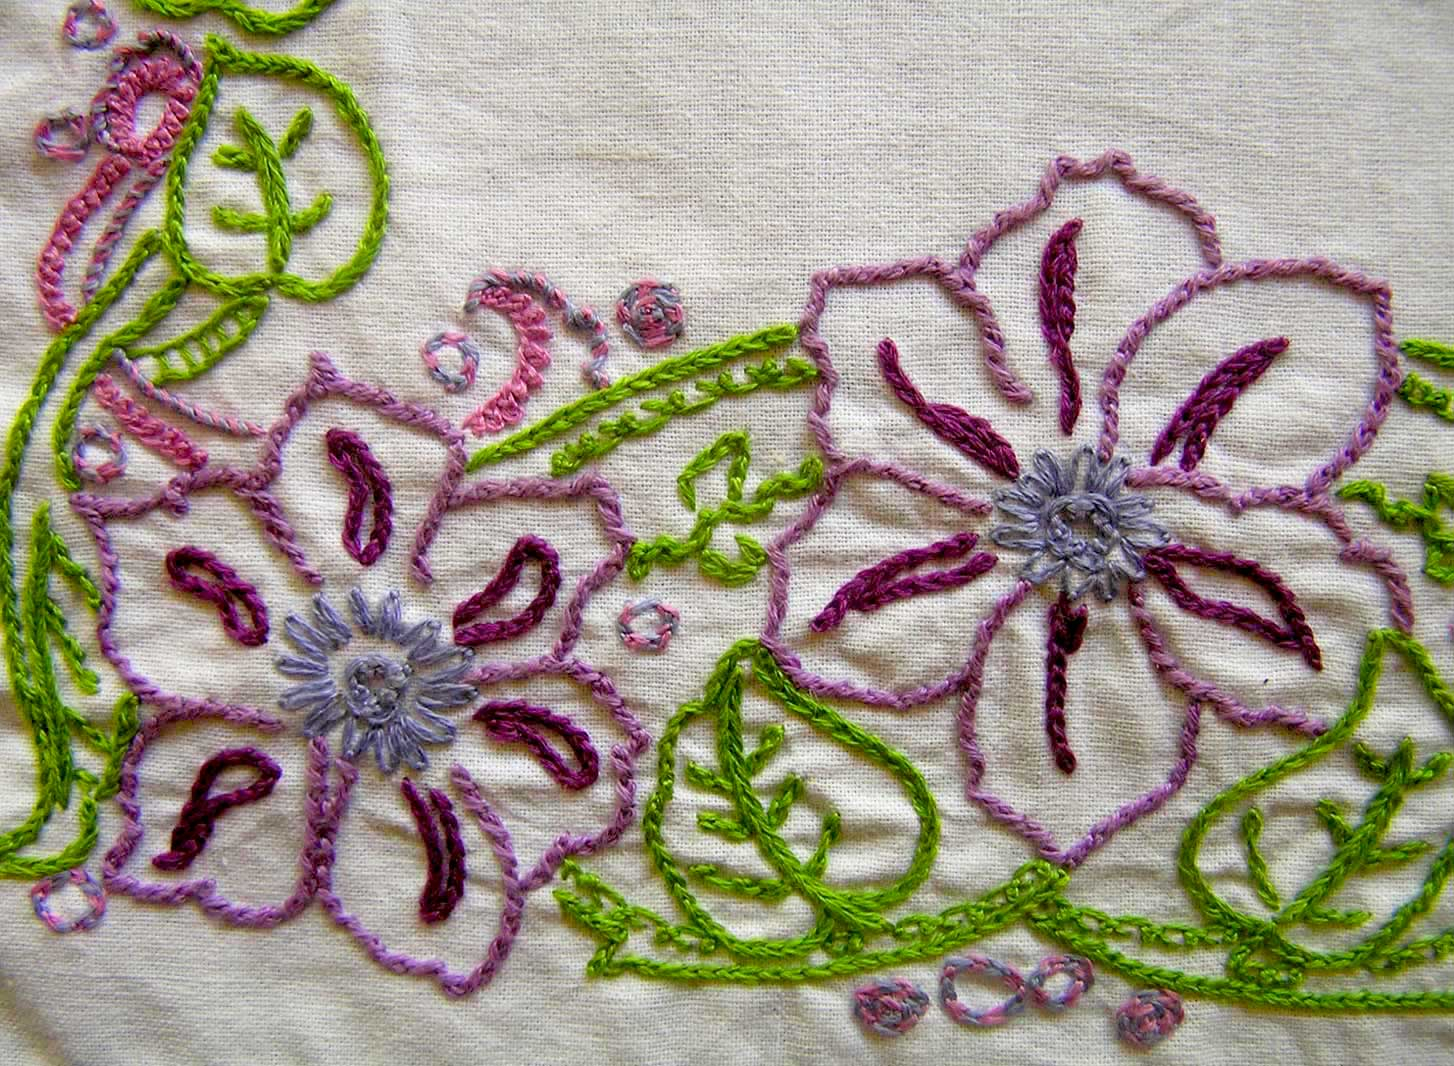 Hand Stitch Embroidery Patterns Free Hand Embroidery Stitches Free Cross Stitch Patterns